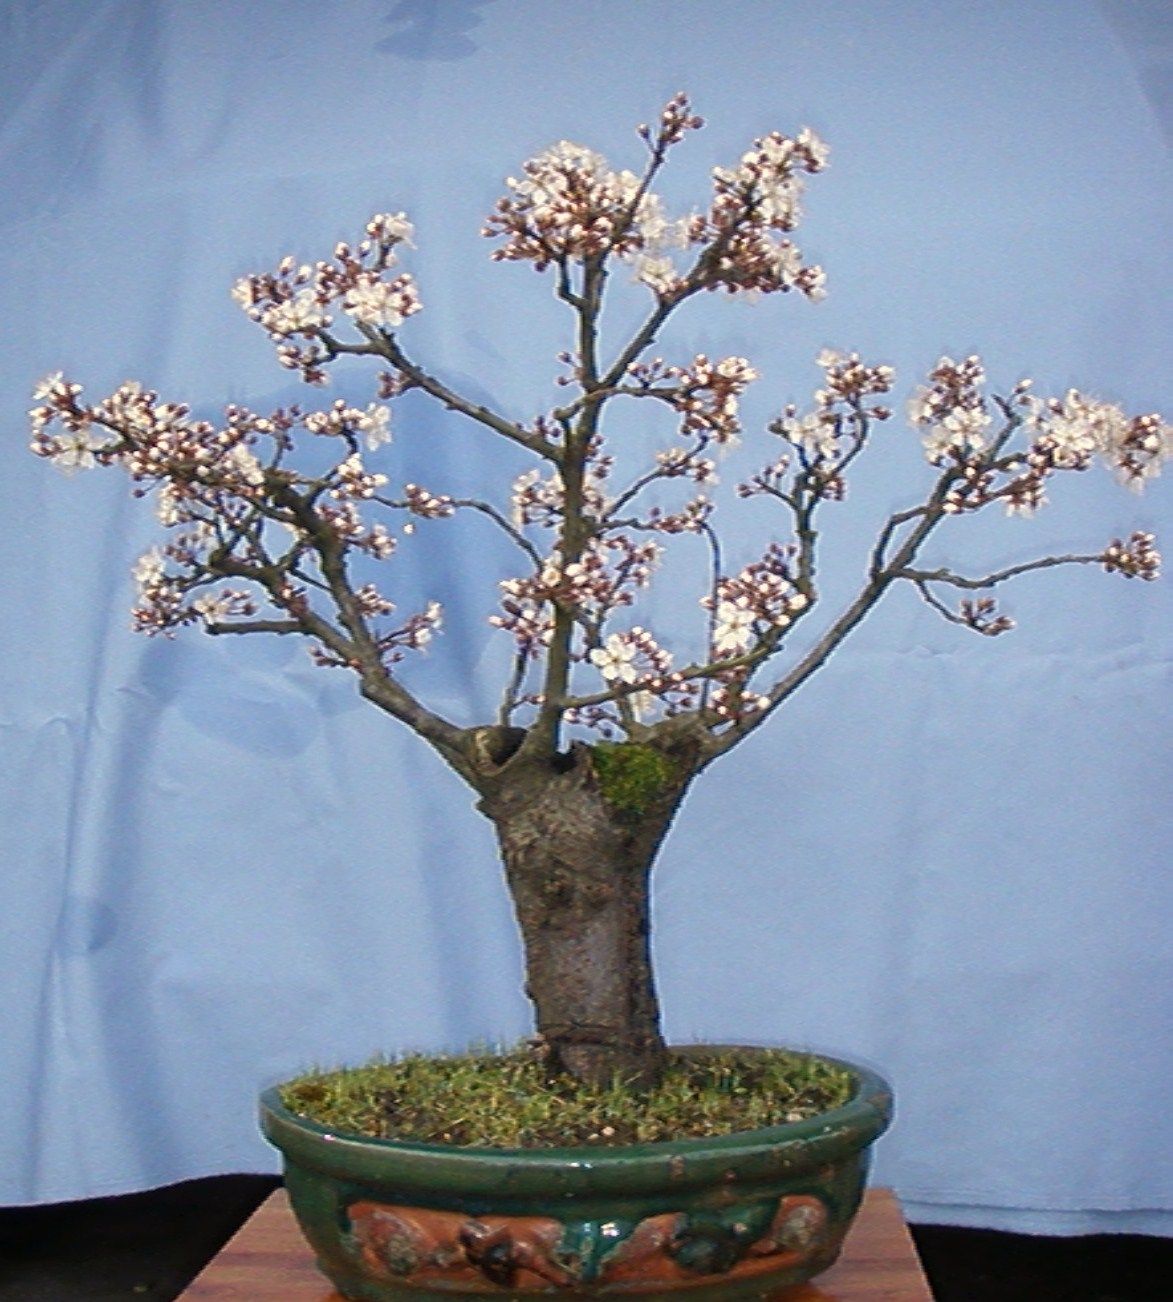 Prunus Cerasifera "Pissardi"